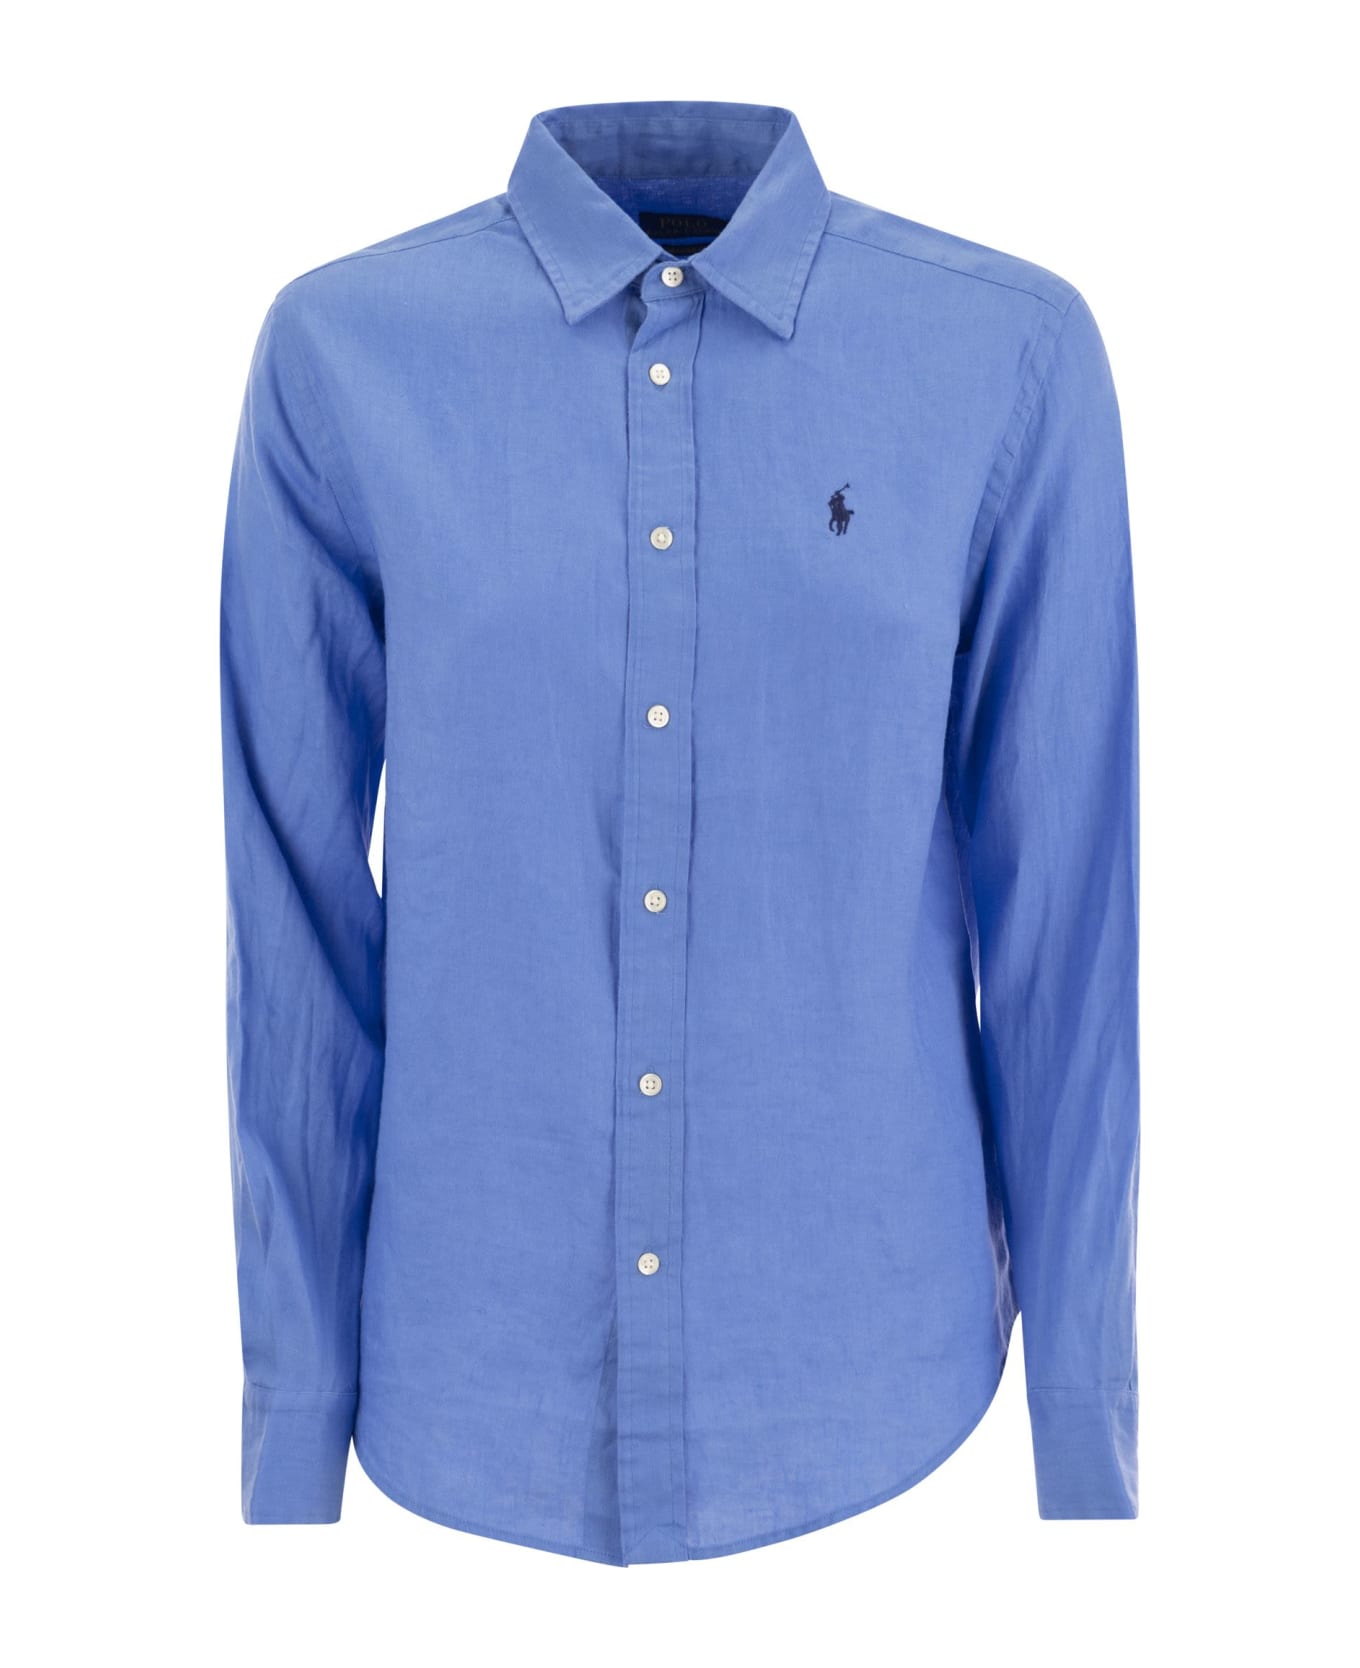 Polo Ralph Lauren Shirt With Pony - Light Blue シャツ